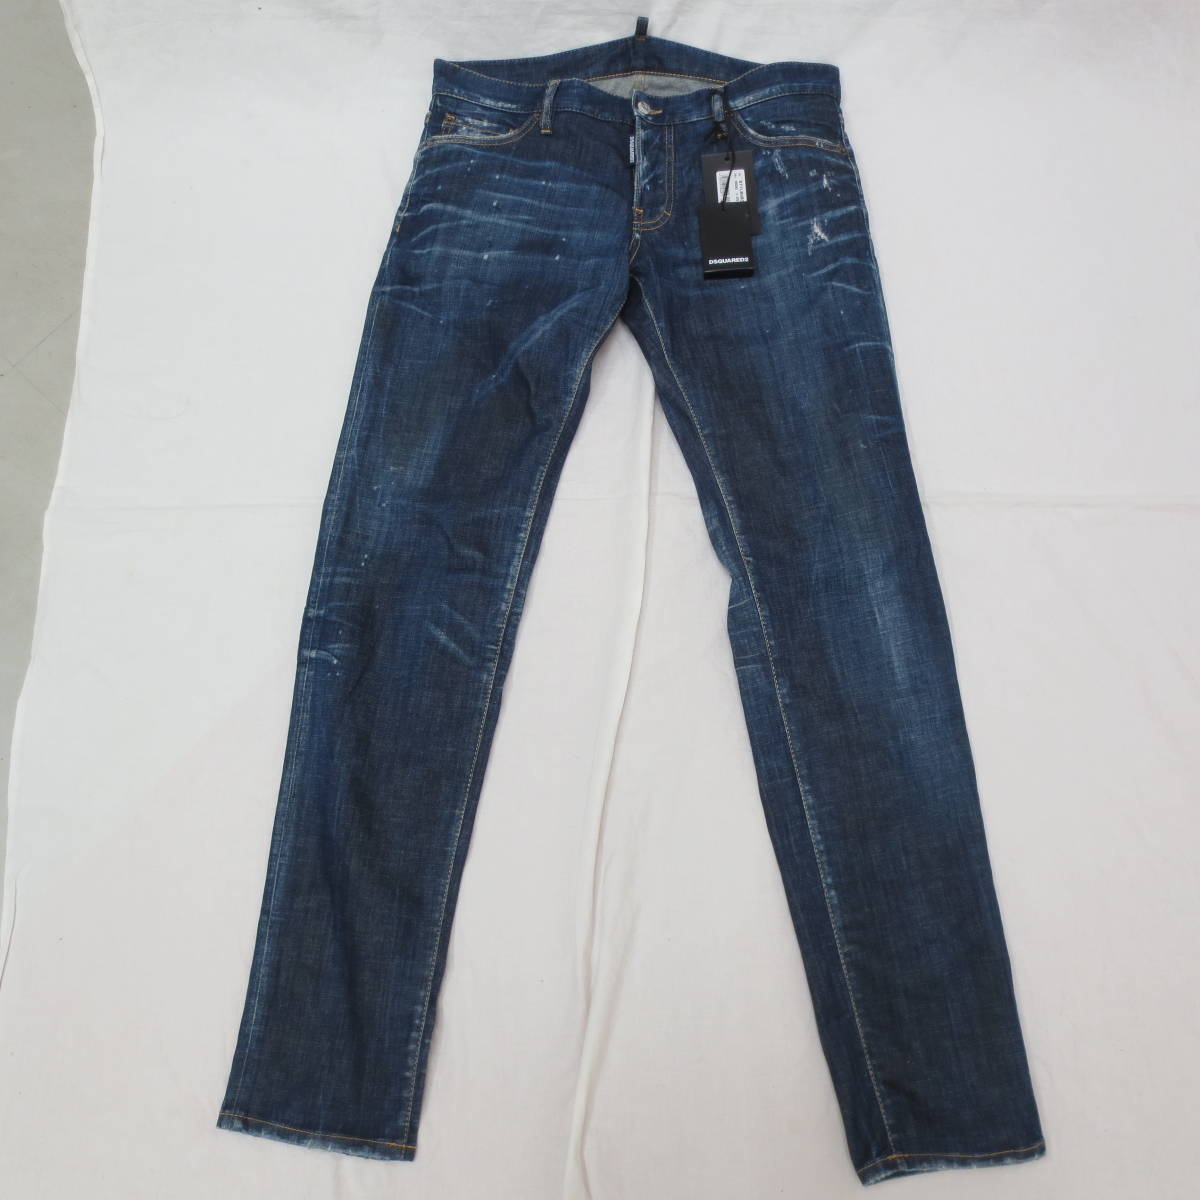 D SQUARED2 crushed denim pants jeans Dスクエアード クラッシュデニム デストロイド ジーンズ 高級品 約70000円